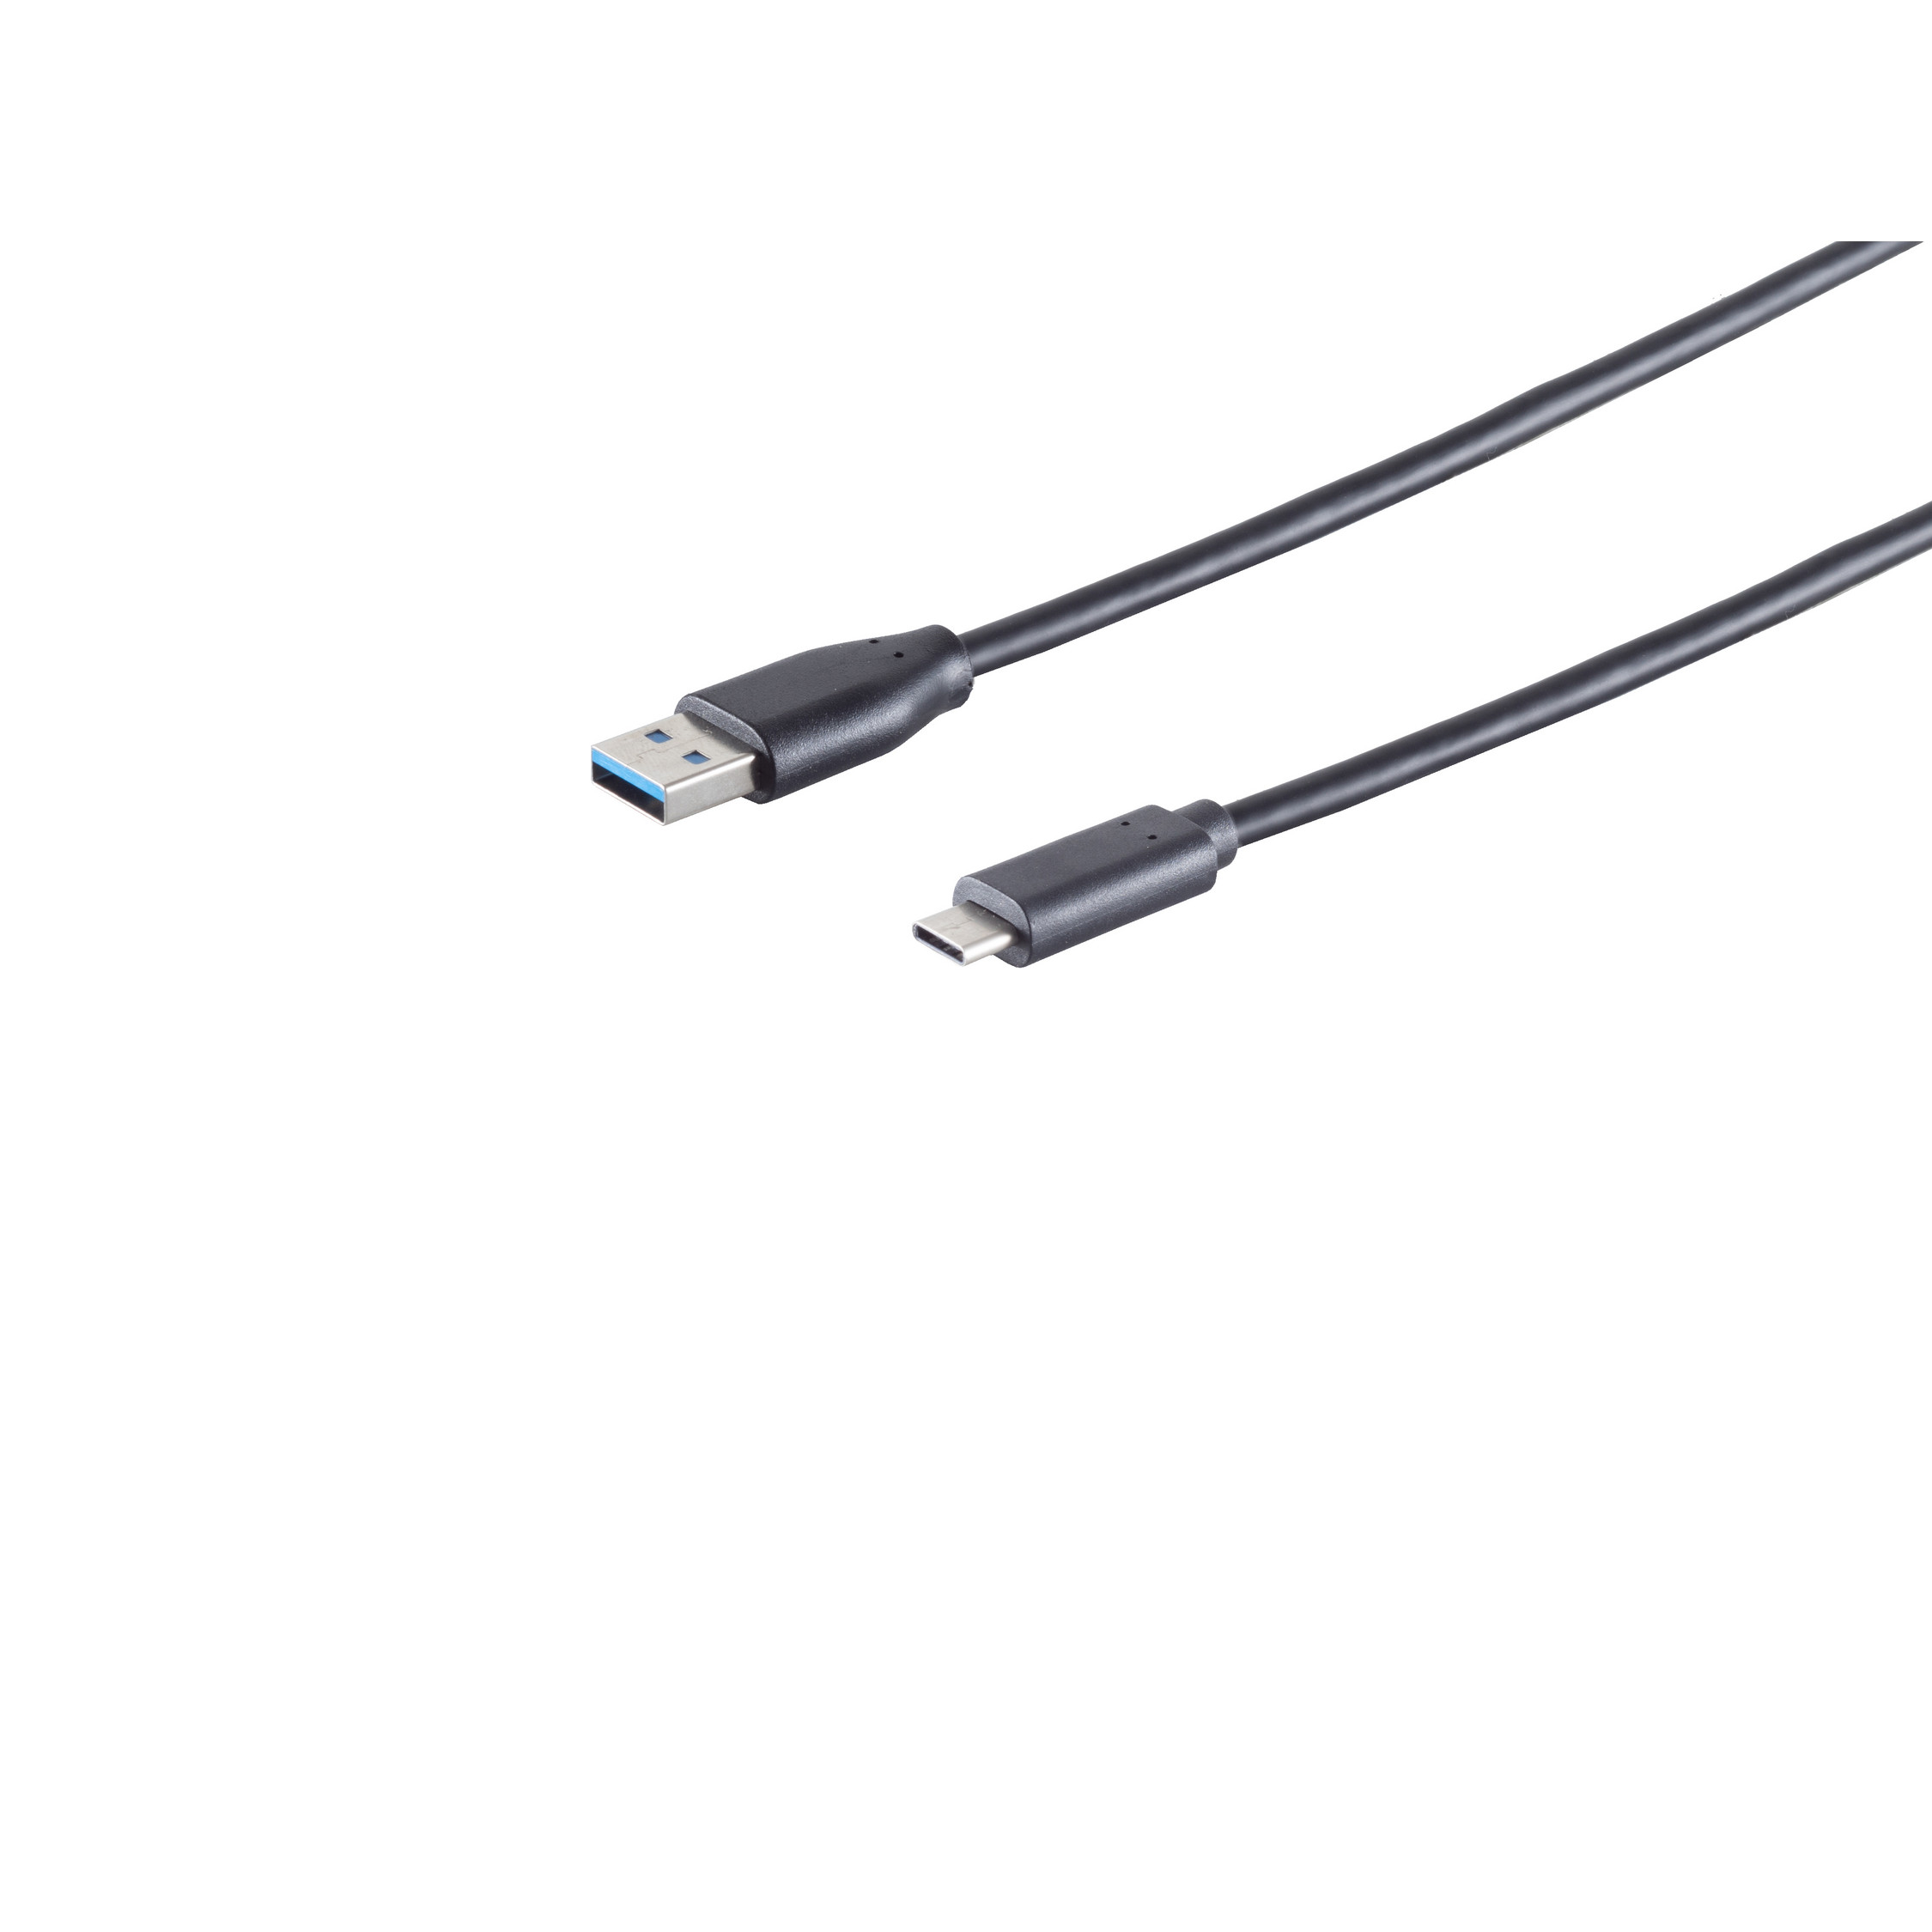 C-Stecker 1m 3.1 MAXIMUM Kabel - 3.0 S/CONN USB CONNECTIVITY A-Stecker, Kabel, USB